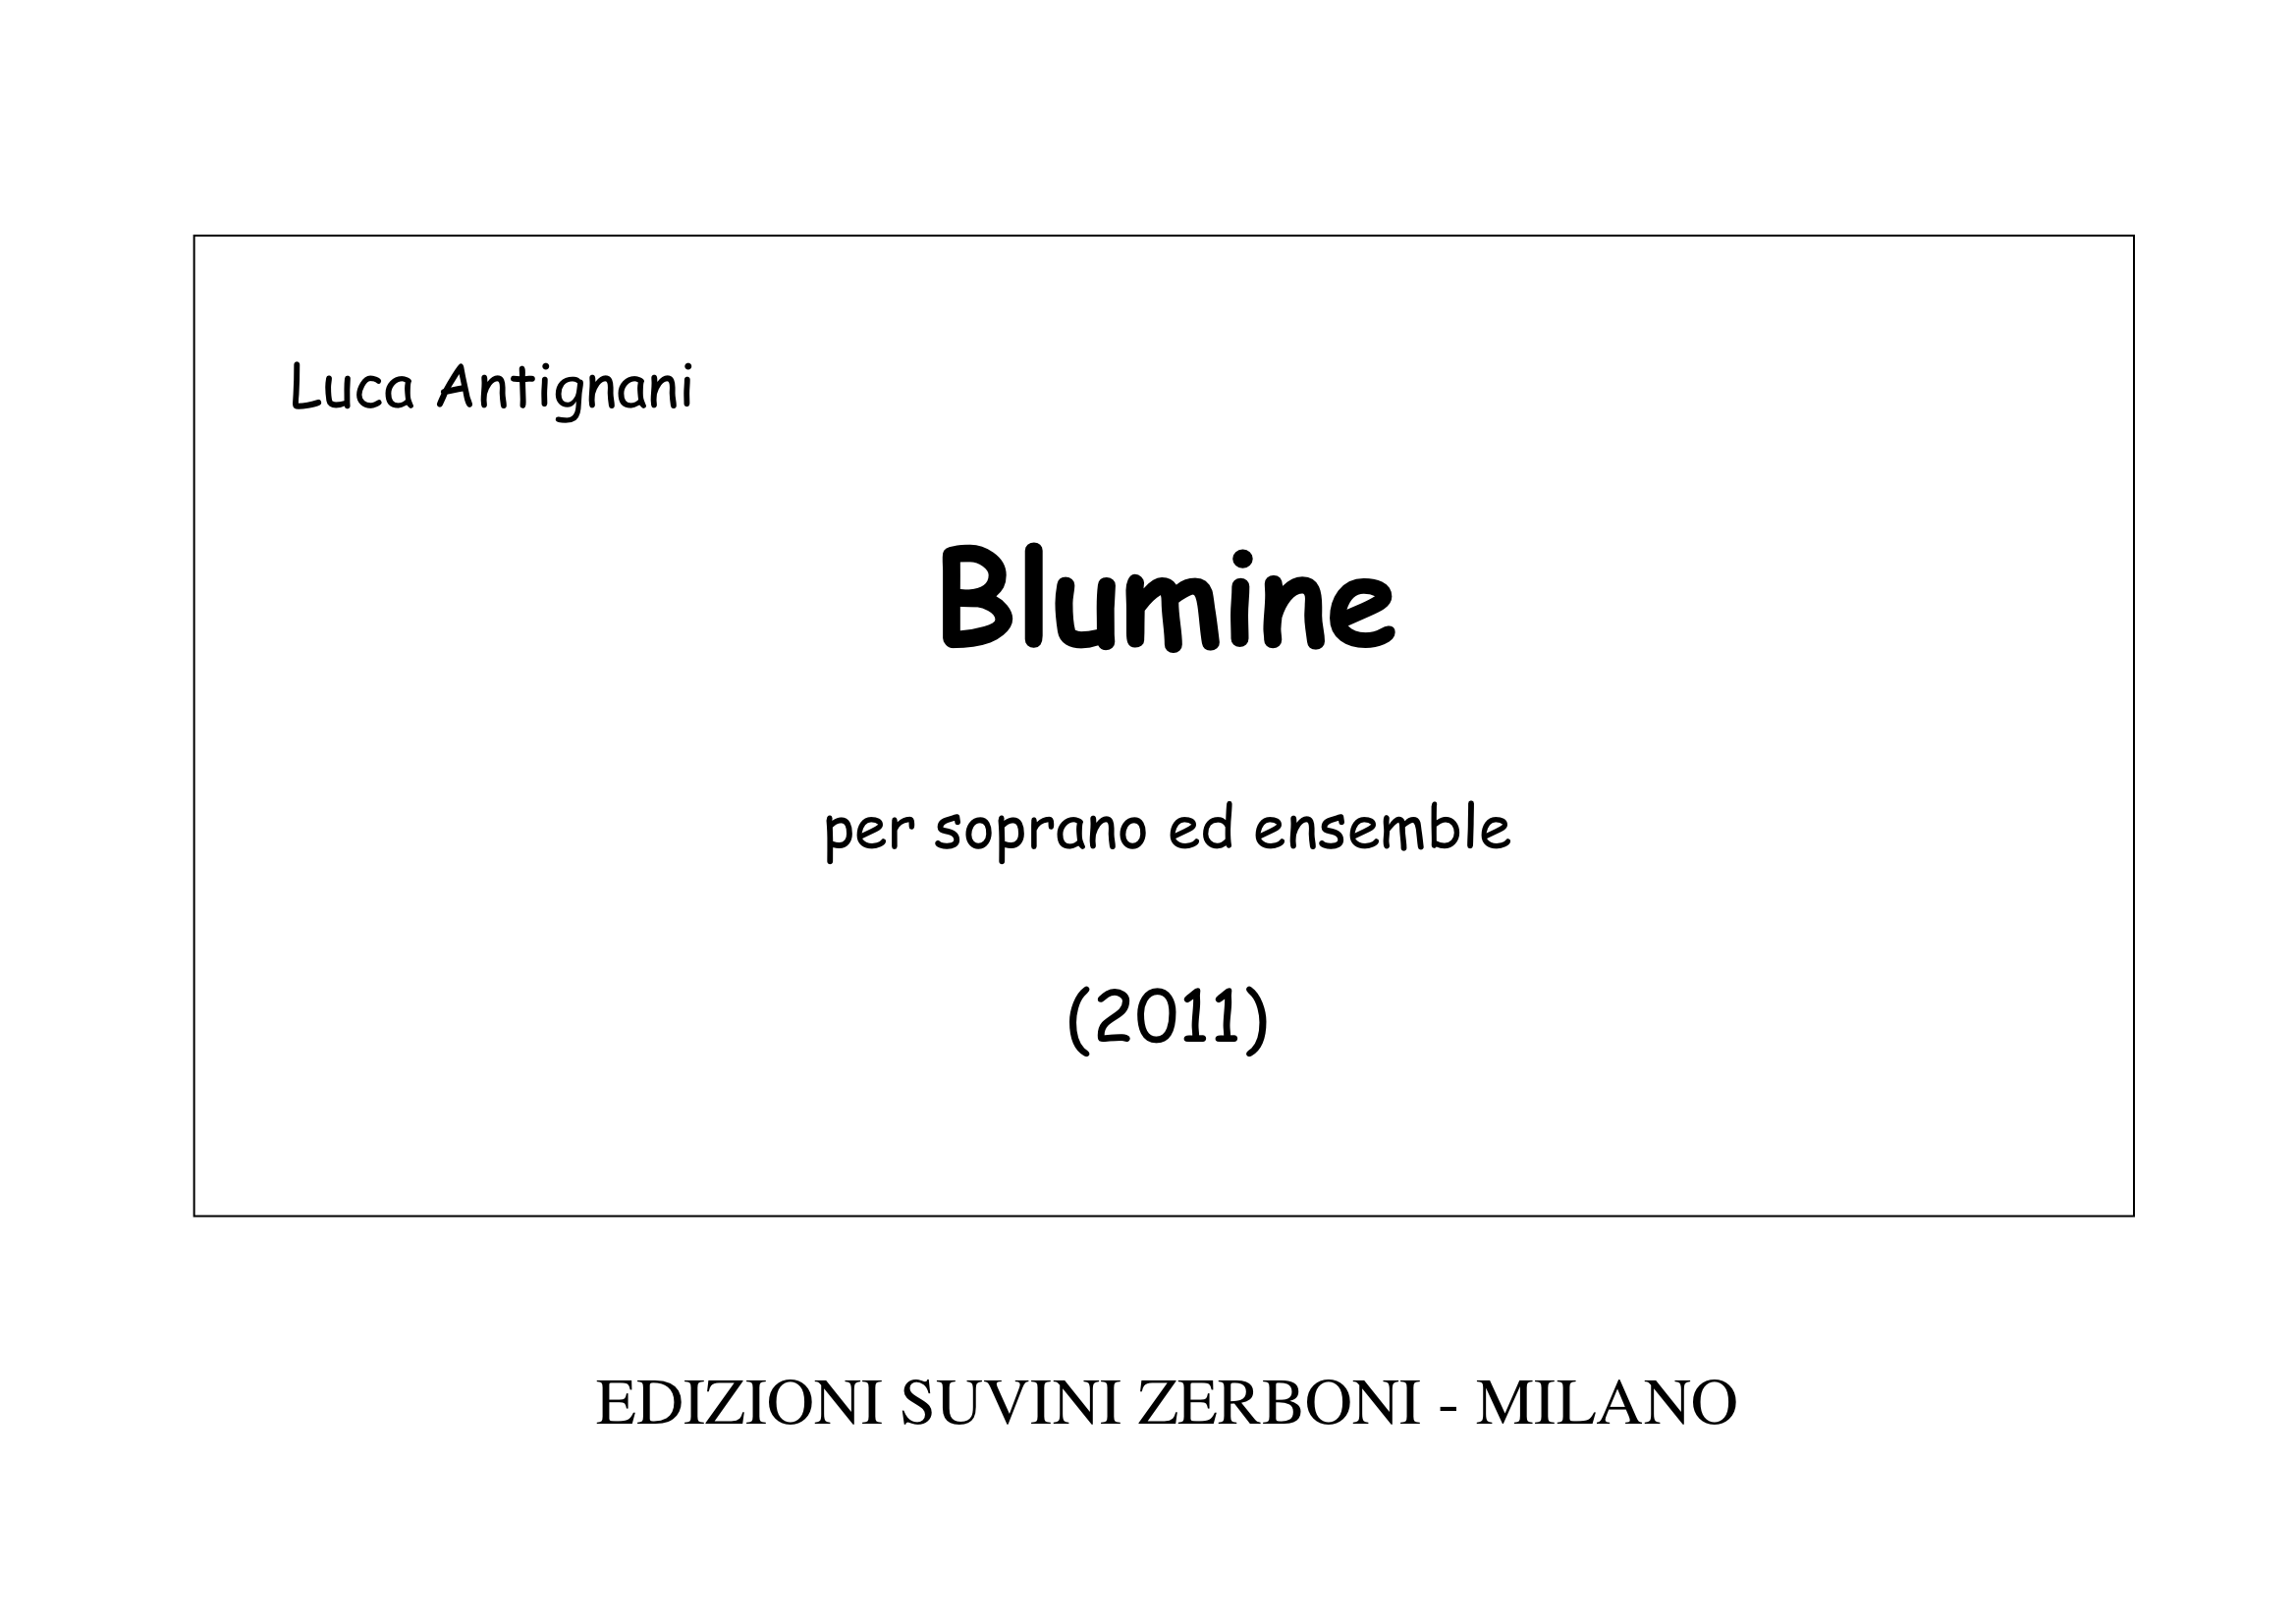 Blumine_Antignani 1